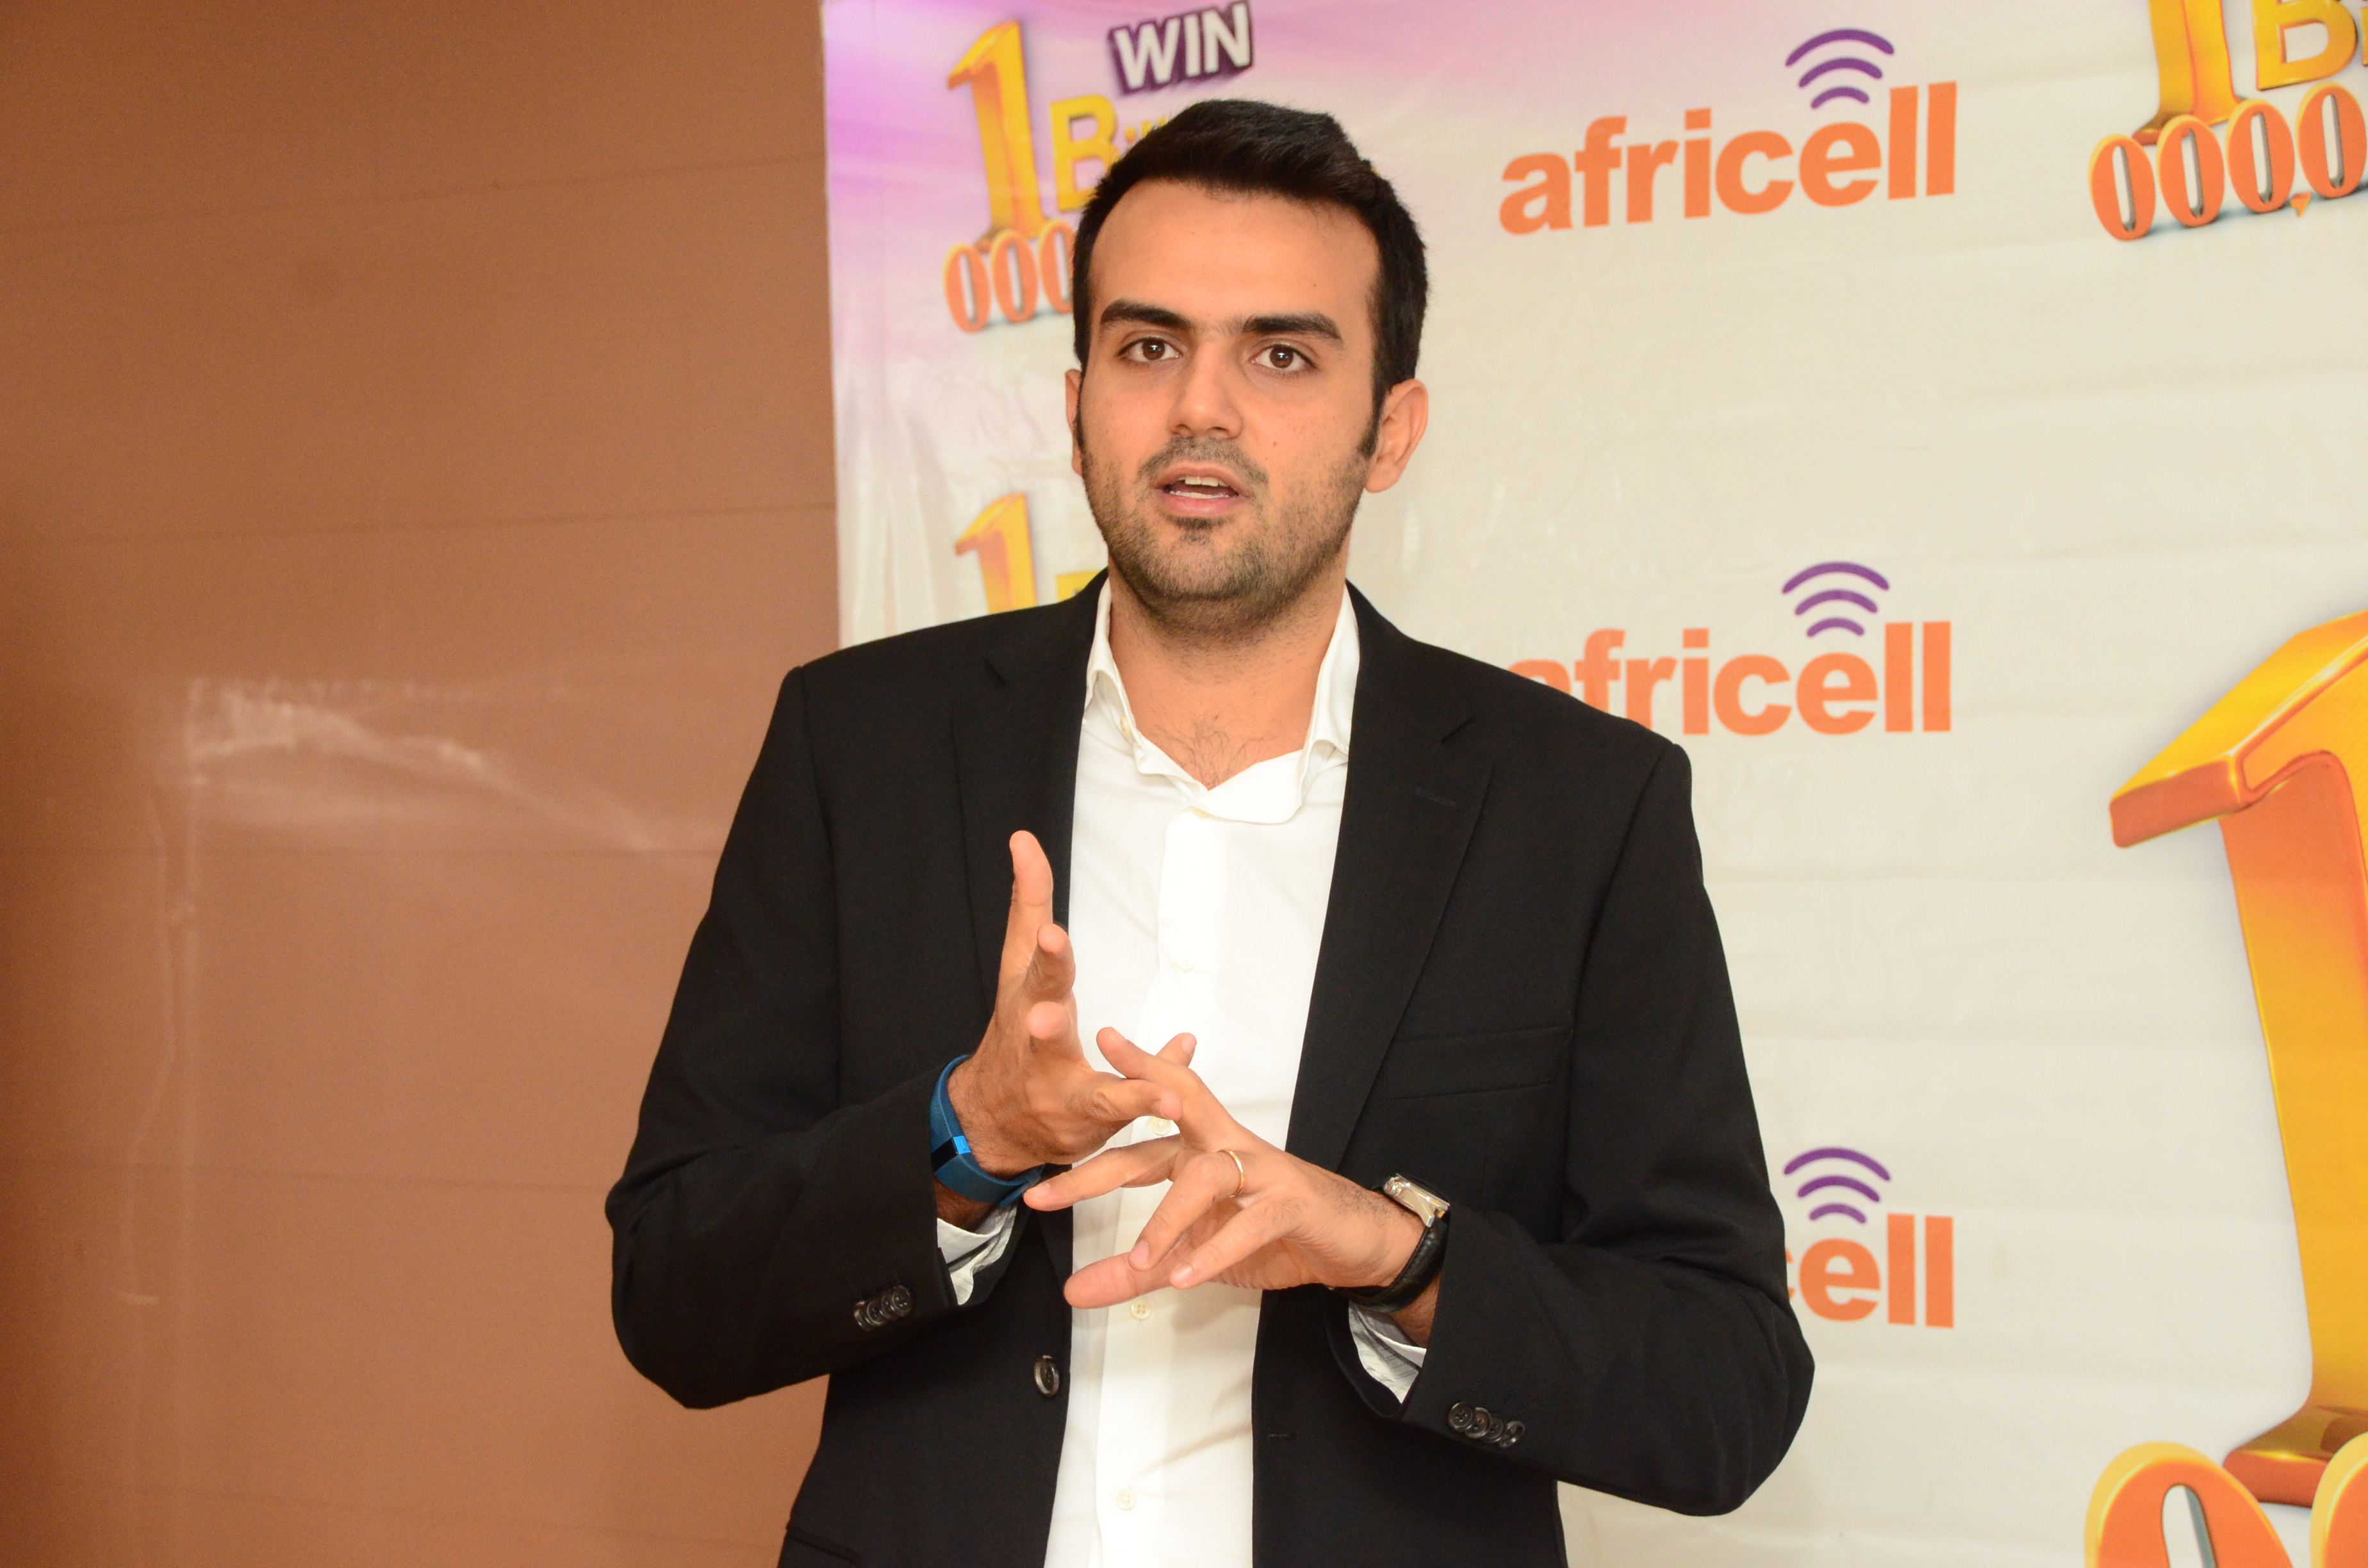 Africell Commercial Director Milad Khairallah explaining the One Billion Shillings promo